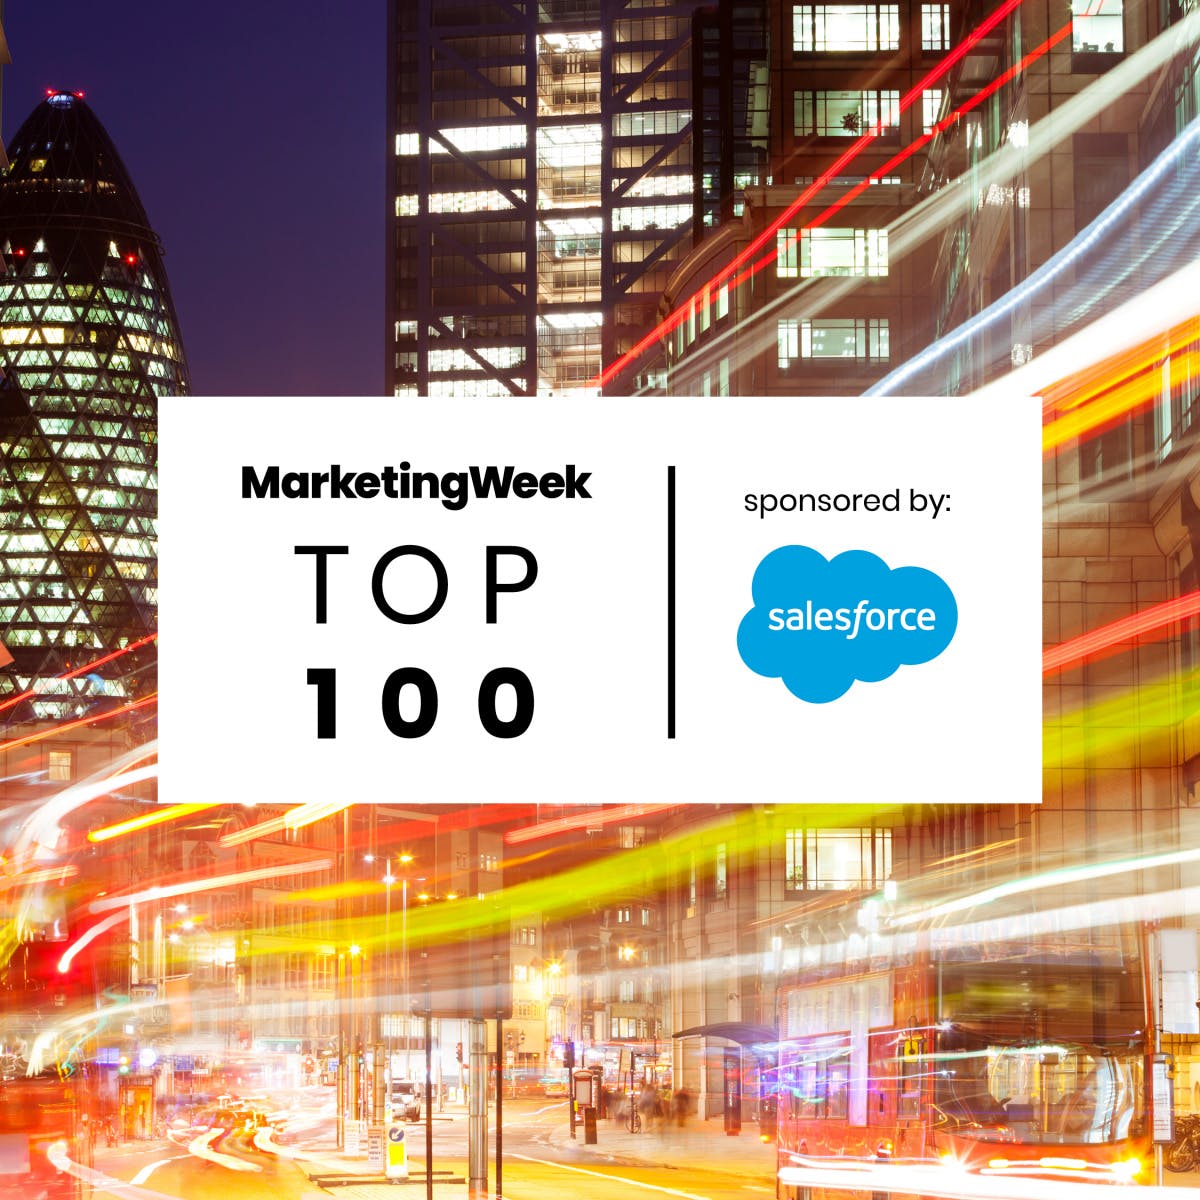 Marketing Week Top 100: Meet the judges